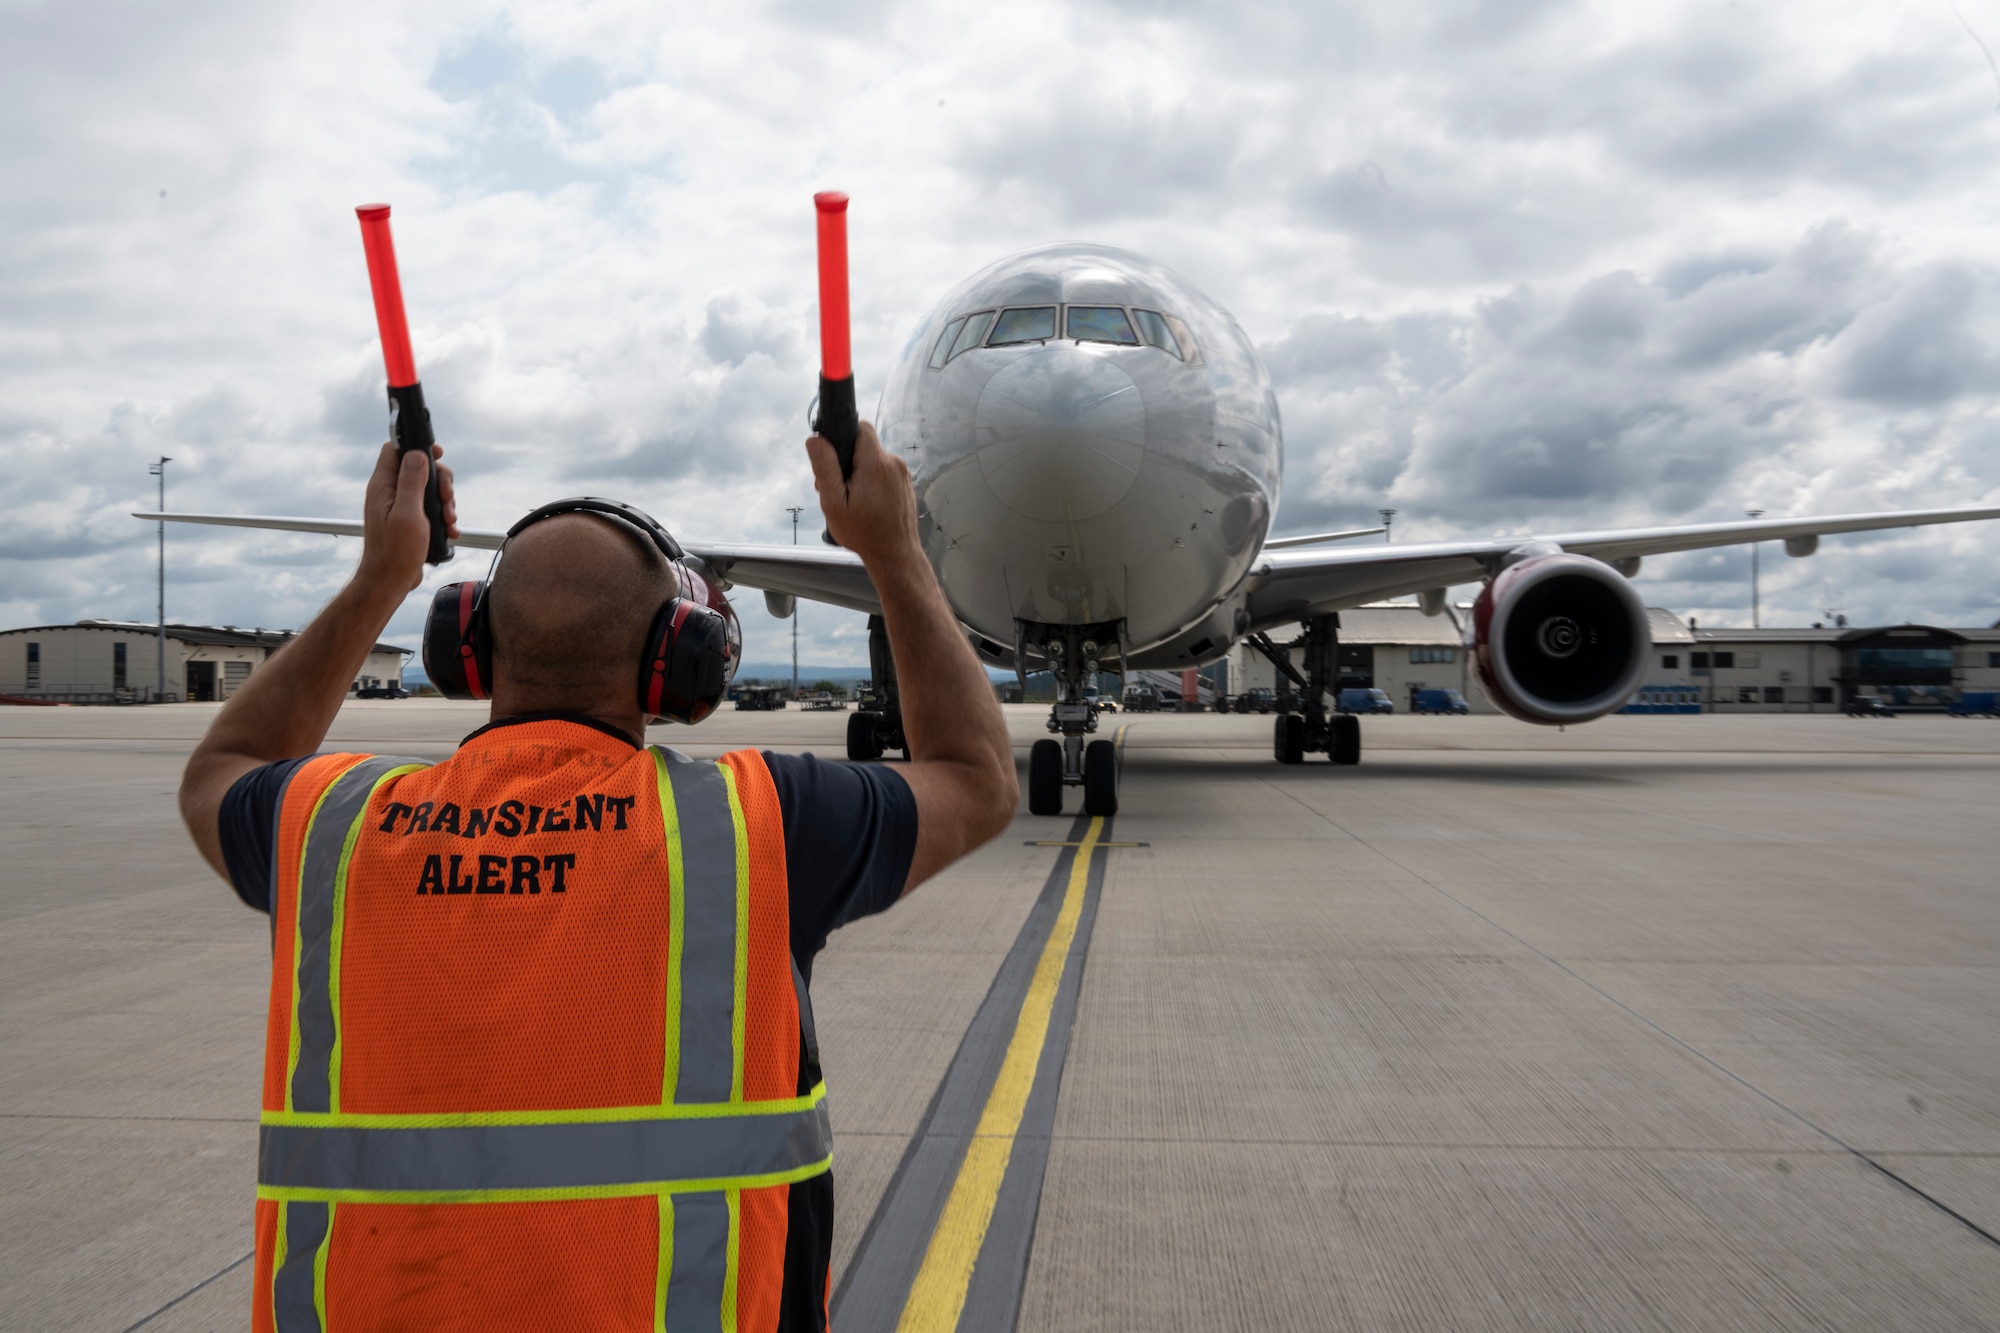 Tim Mesecar, 52nd Maintenance Squadron Transit Alert assistant site manager, marshals a Patriot Express passenger jet on Spangdahlem Air Base, Germany, Aug. 23, 2021.